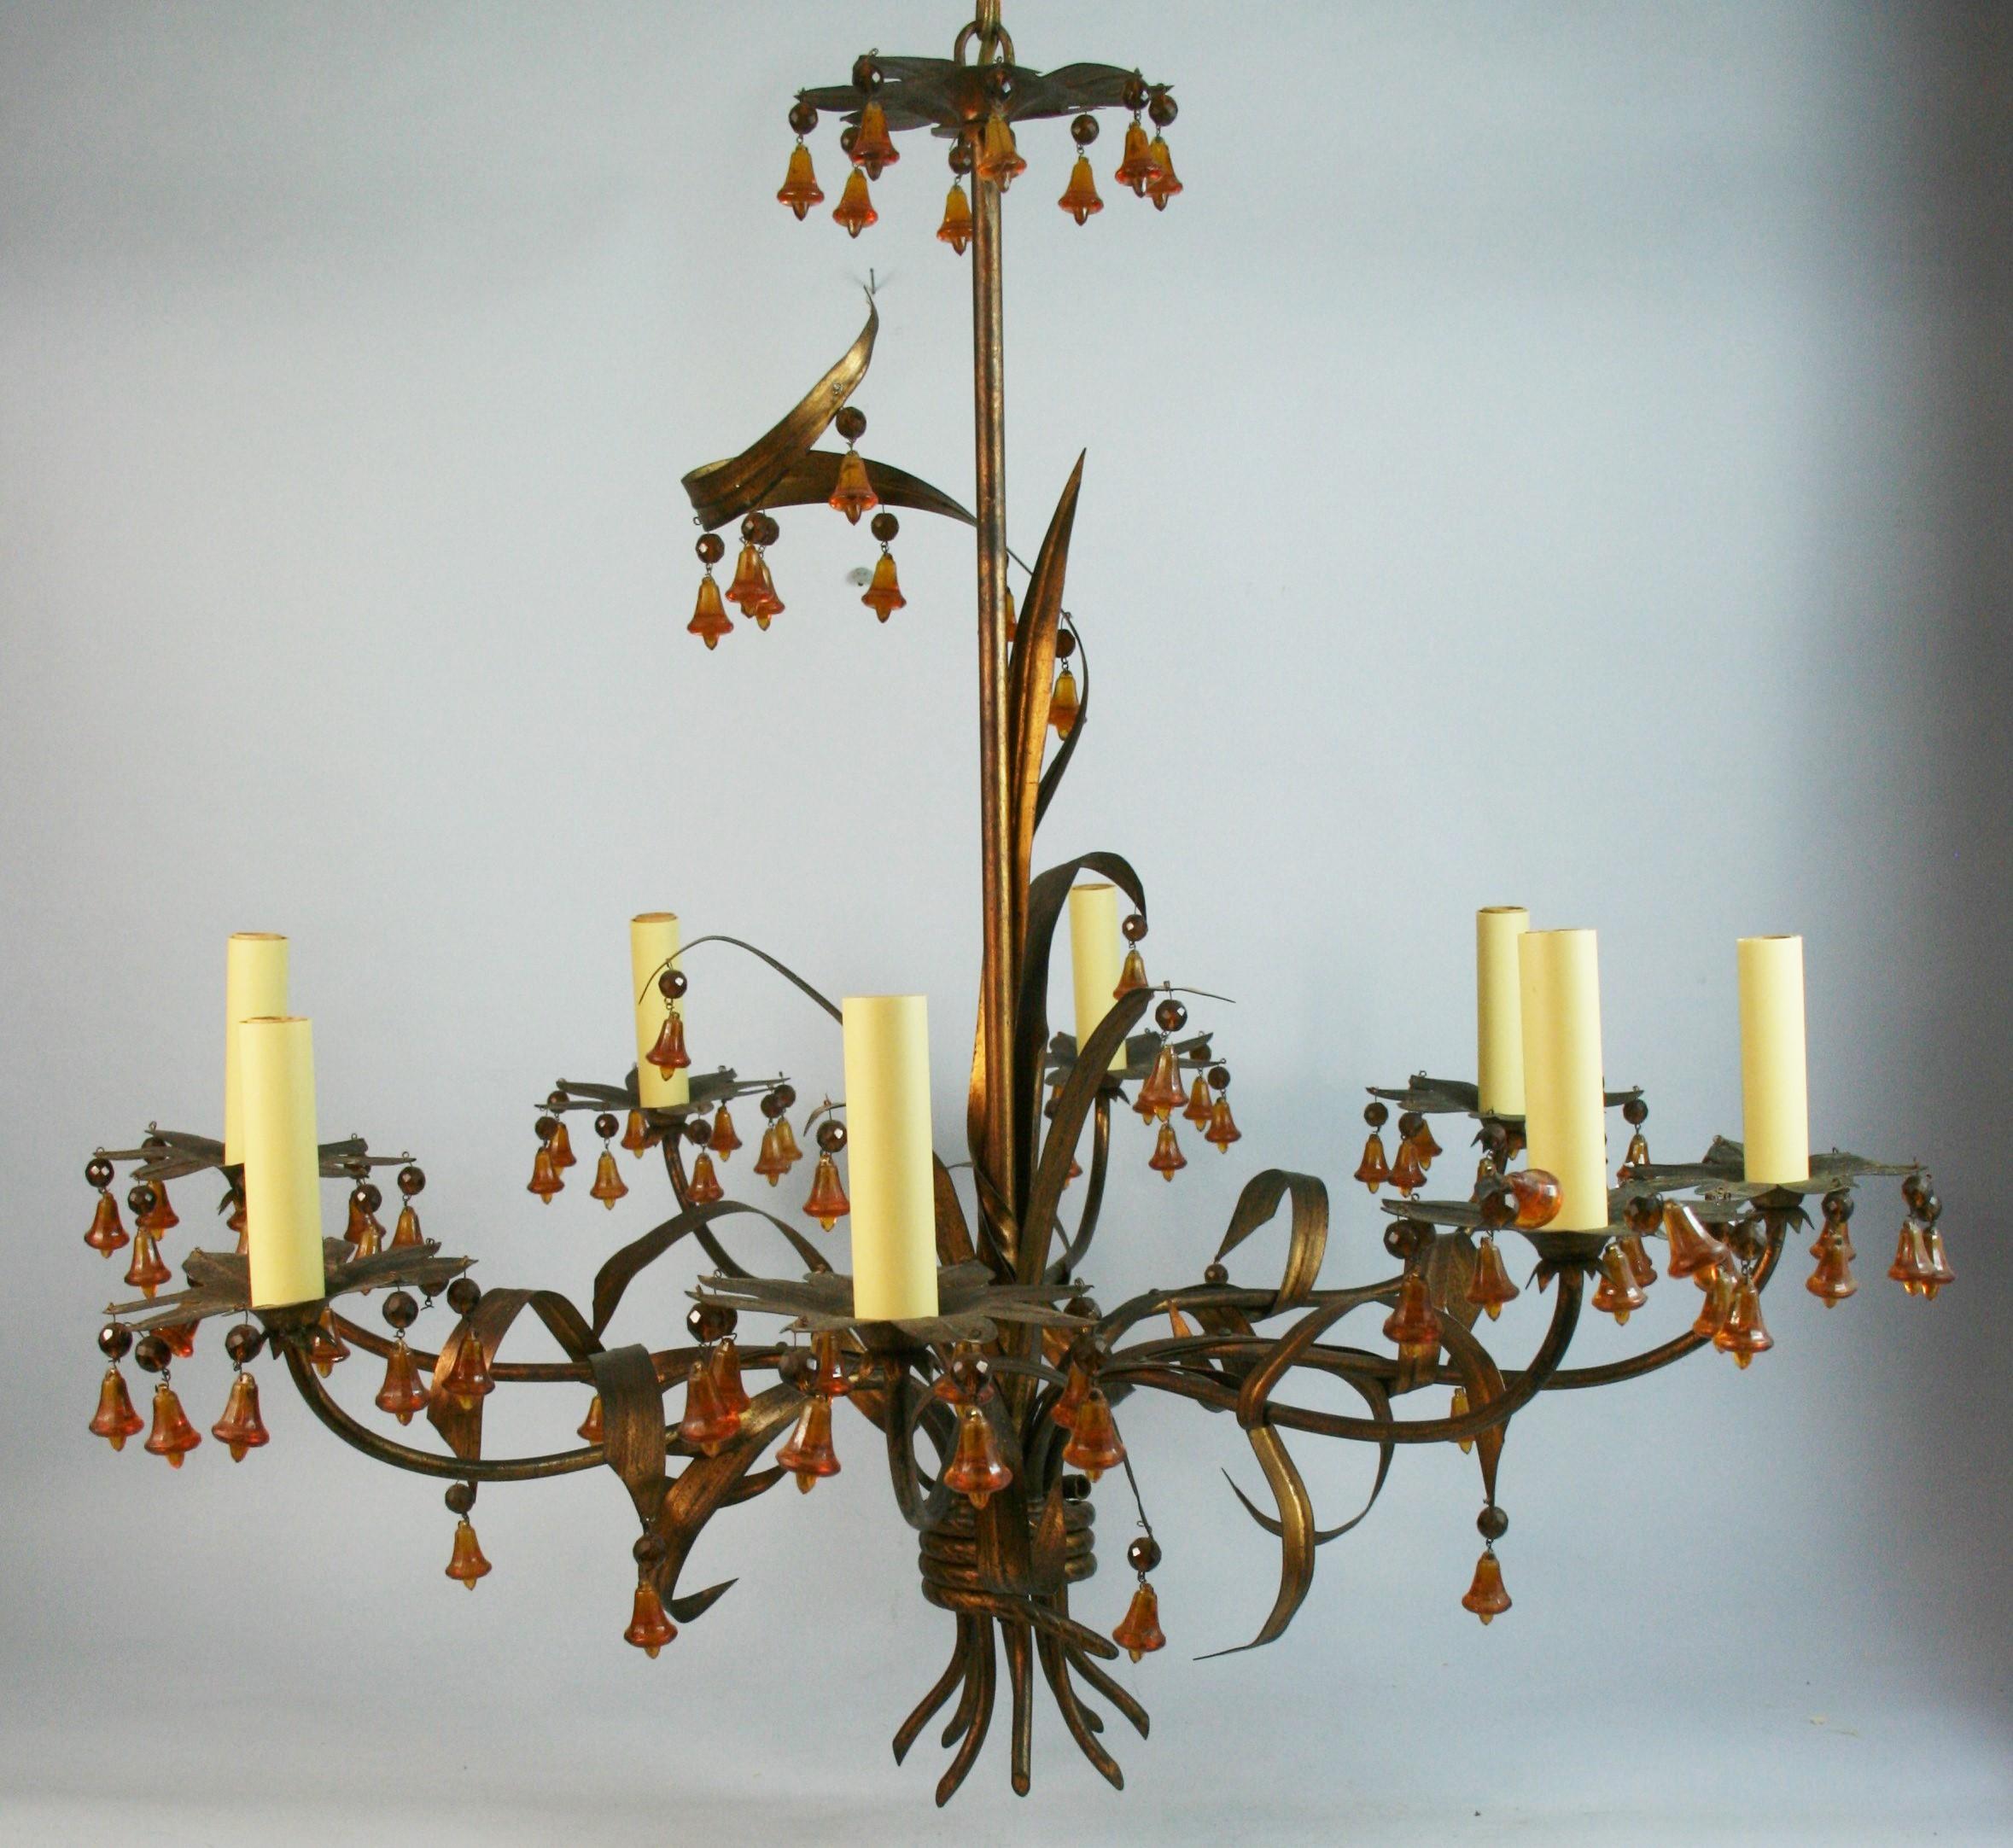 1617 Eight lights gilt brass with leaves dressed with handmade amber glass bells. 40 watt candelabra base bulb.